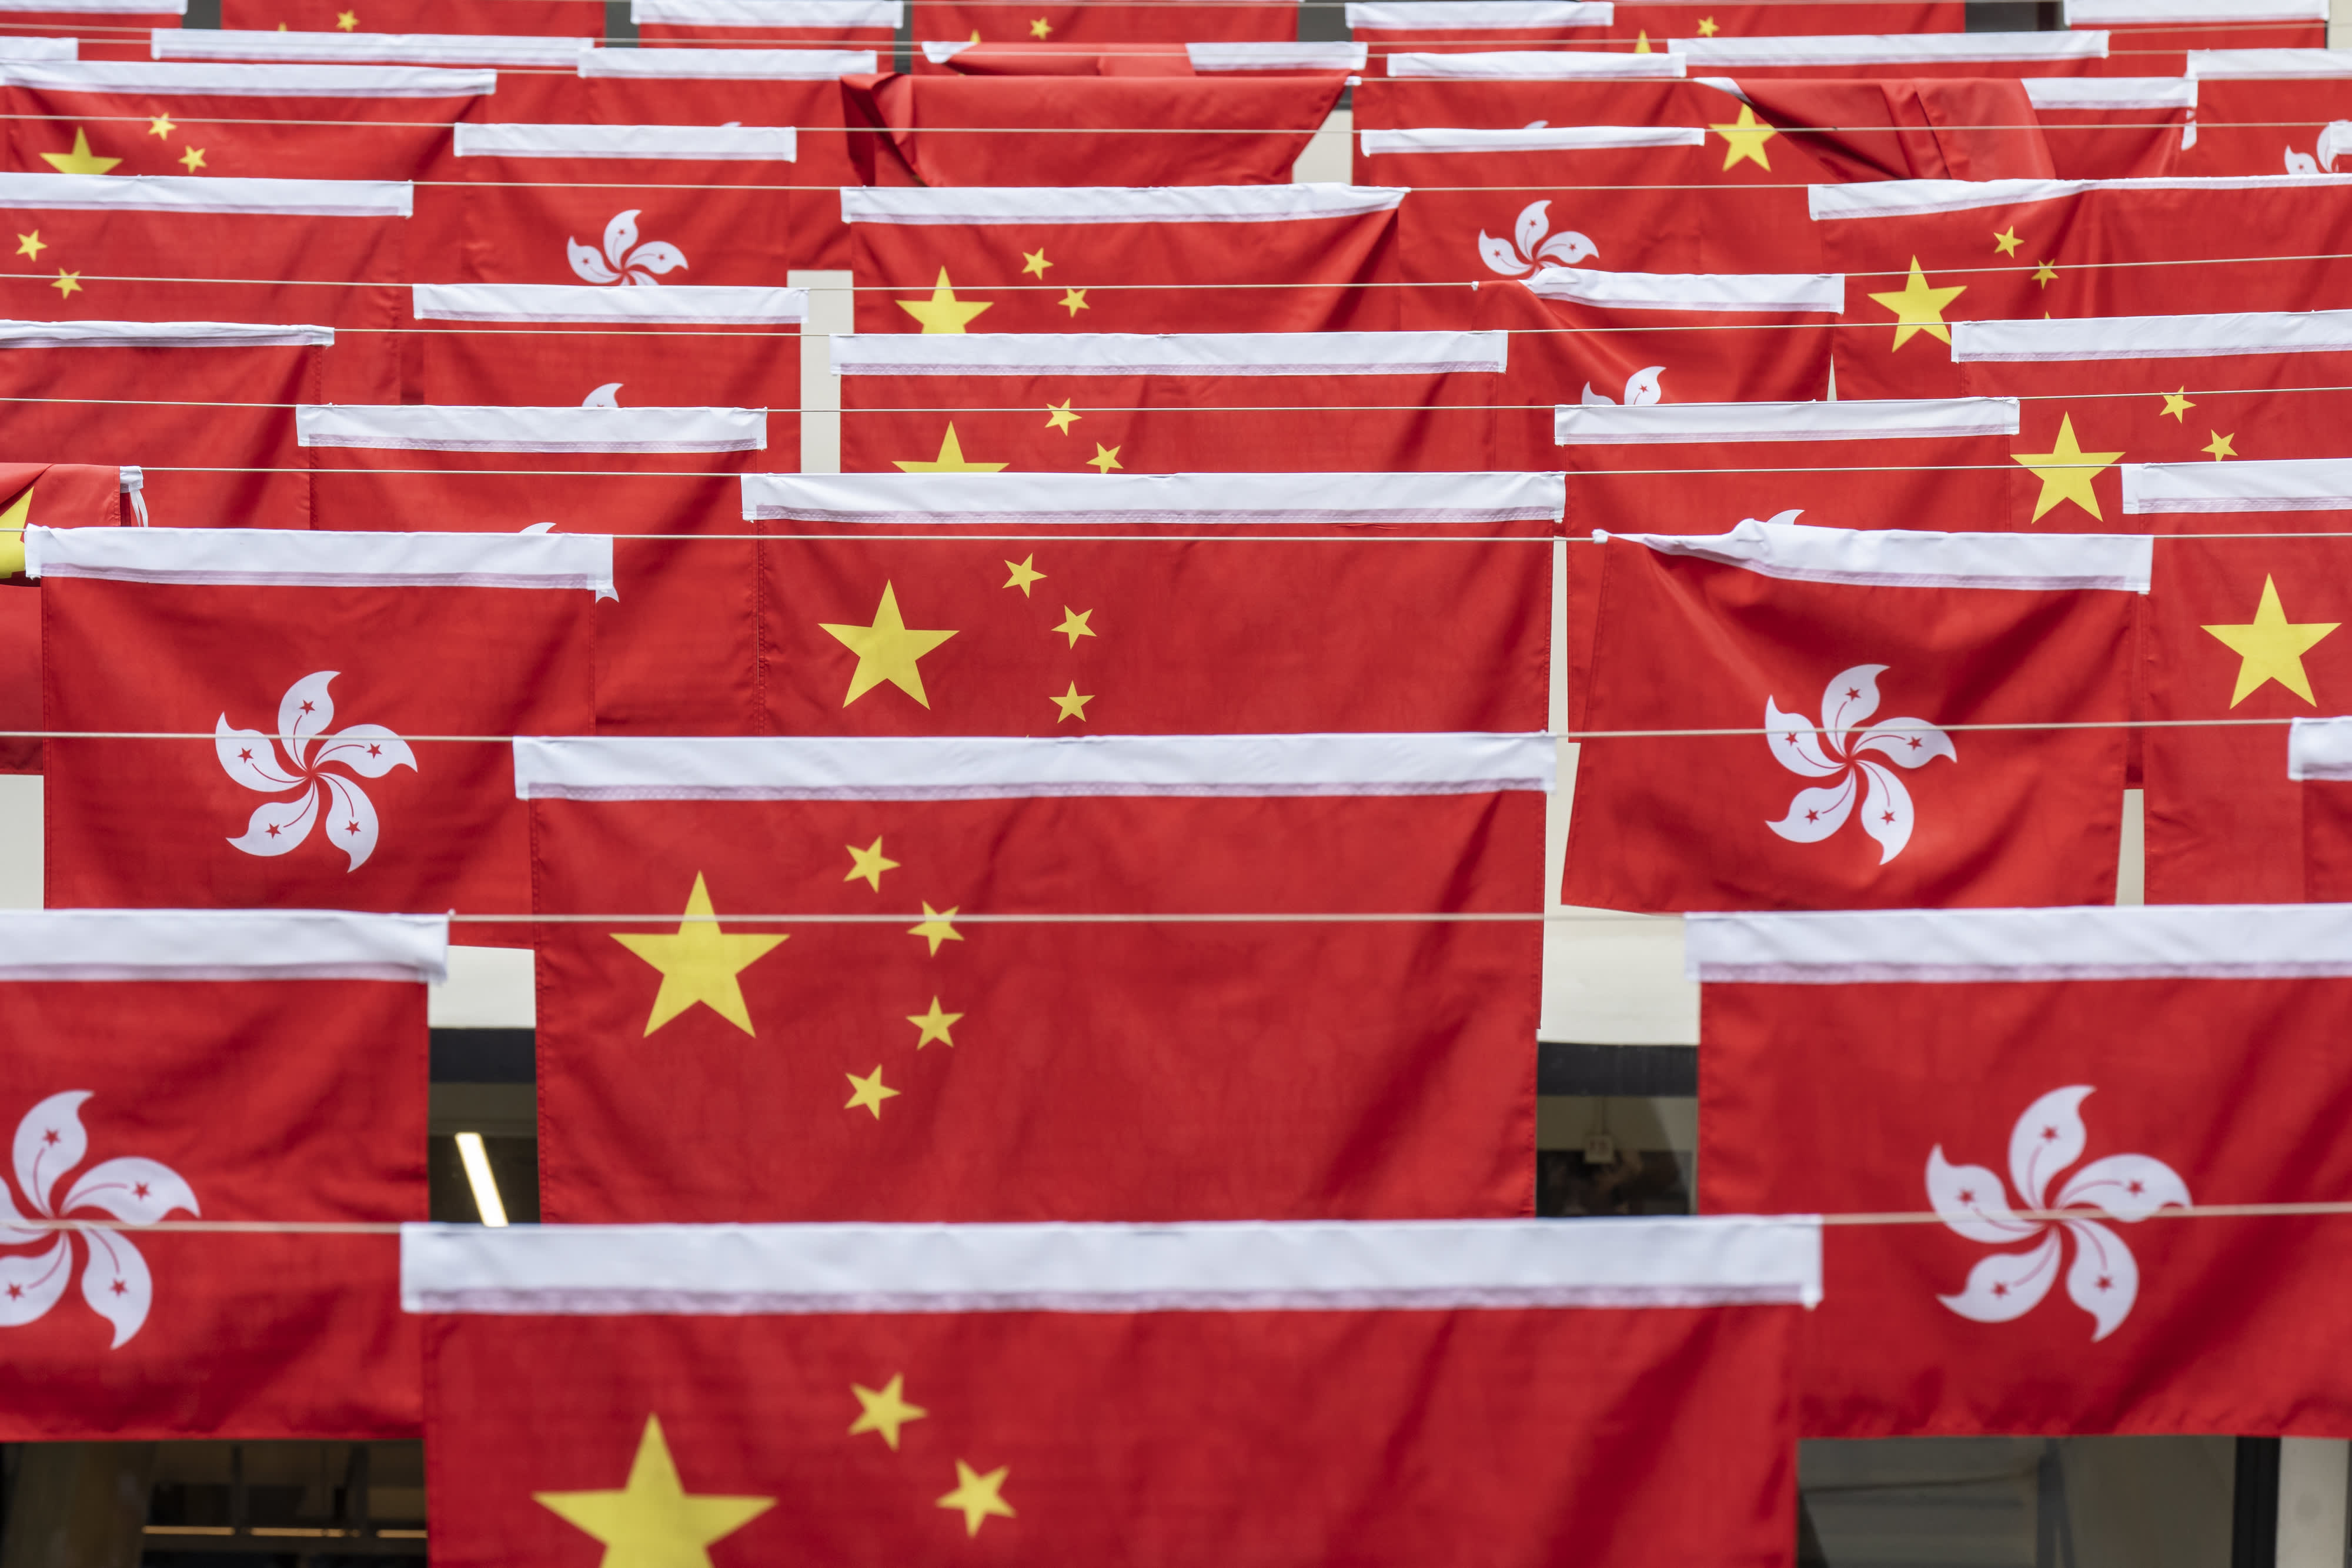 Tiongkok menanggapi Amerika Serikat karena “memfitnah” undang-undang keamanan baru di Hong Kong